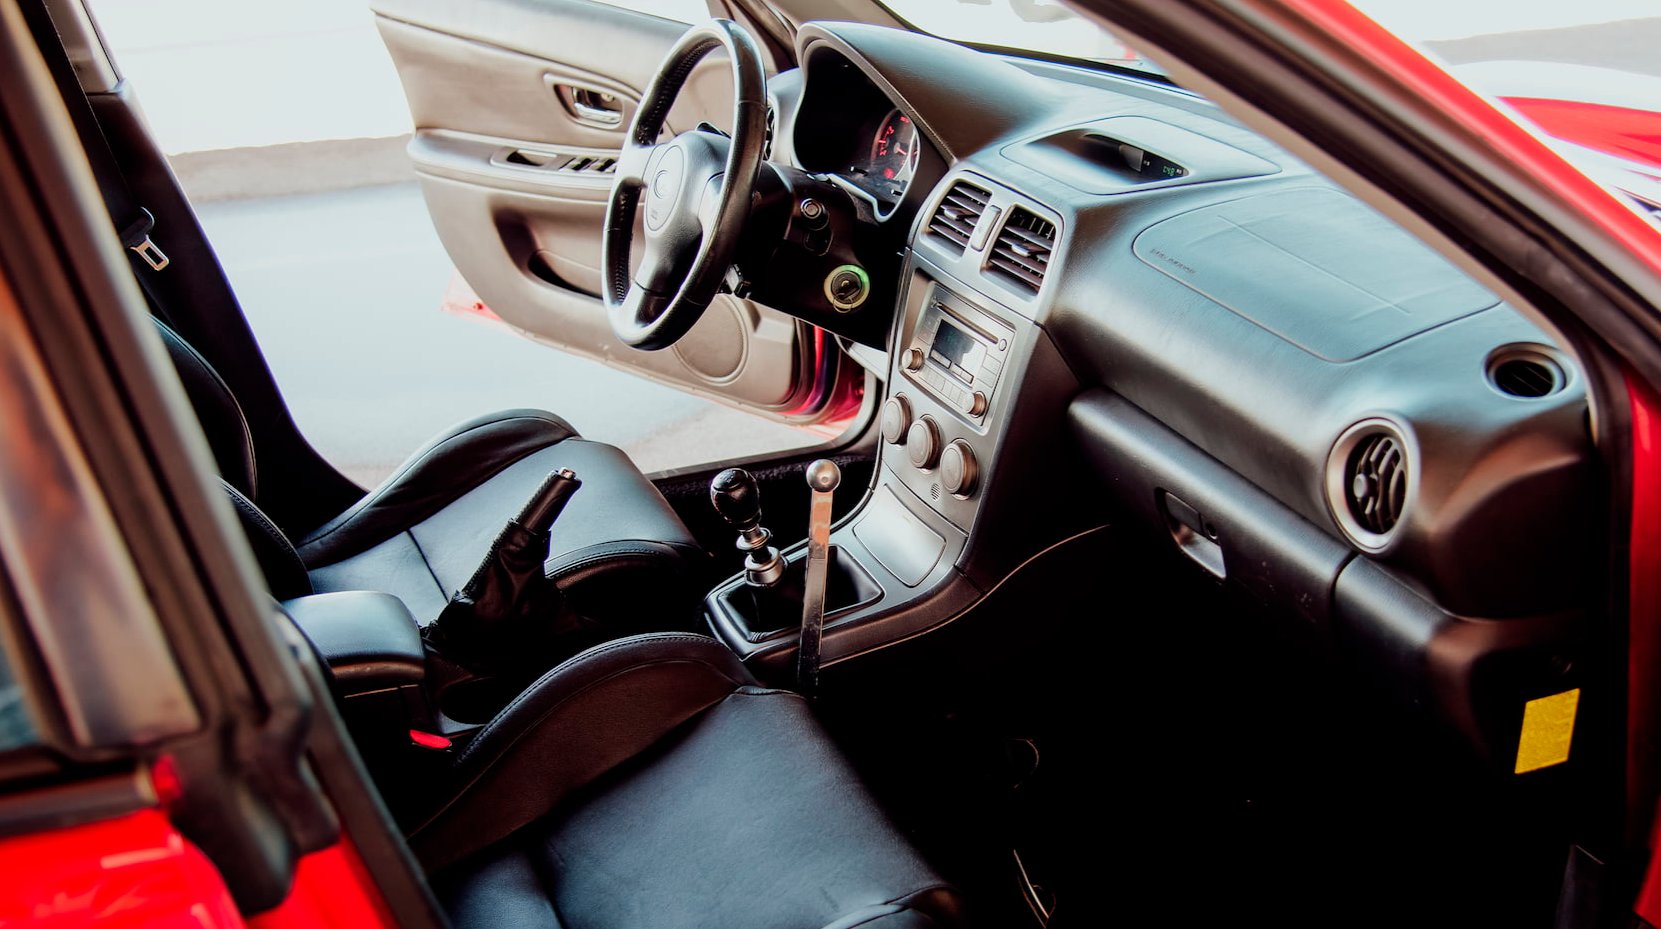 Upravené Subaru Impreza WRX použité během natáčení filmu Baby Driver